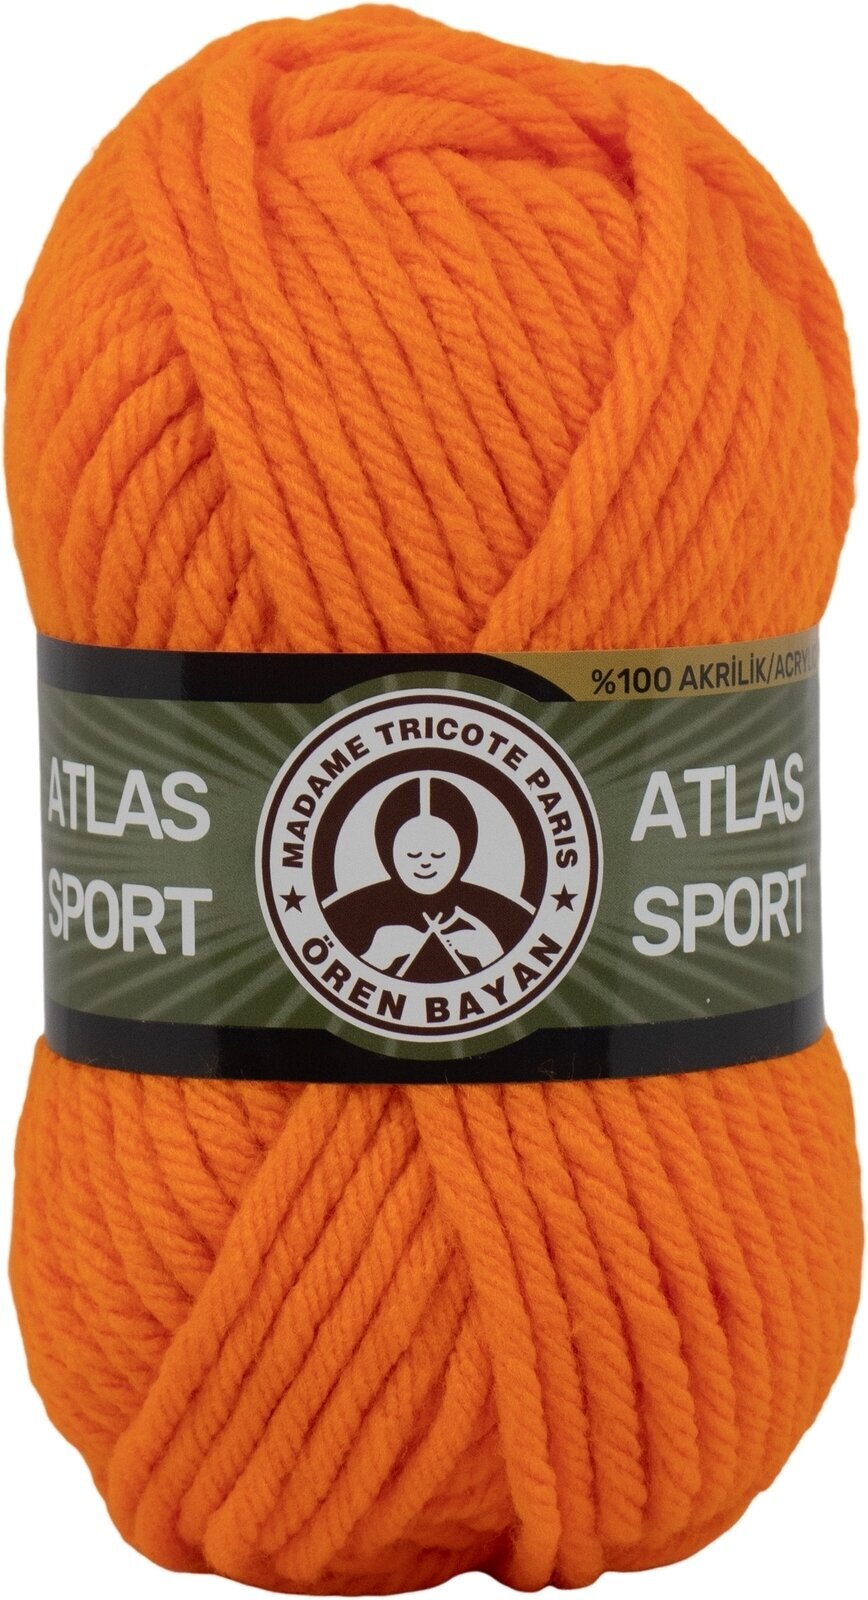 Knitting Yarn Madame Tricote Paris Atlas Sport 3024 147 Knitting Yarn